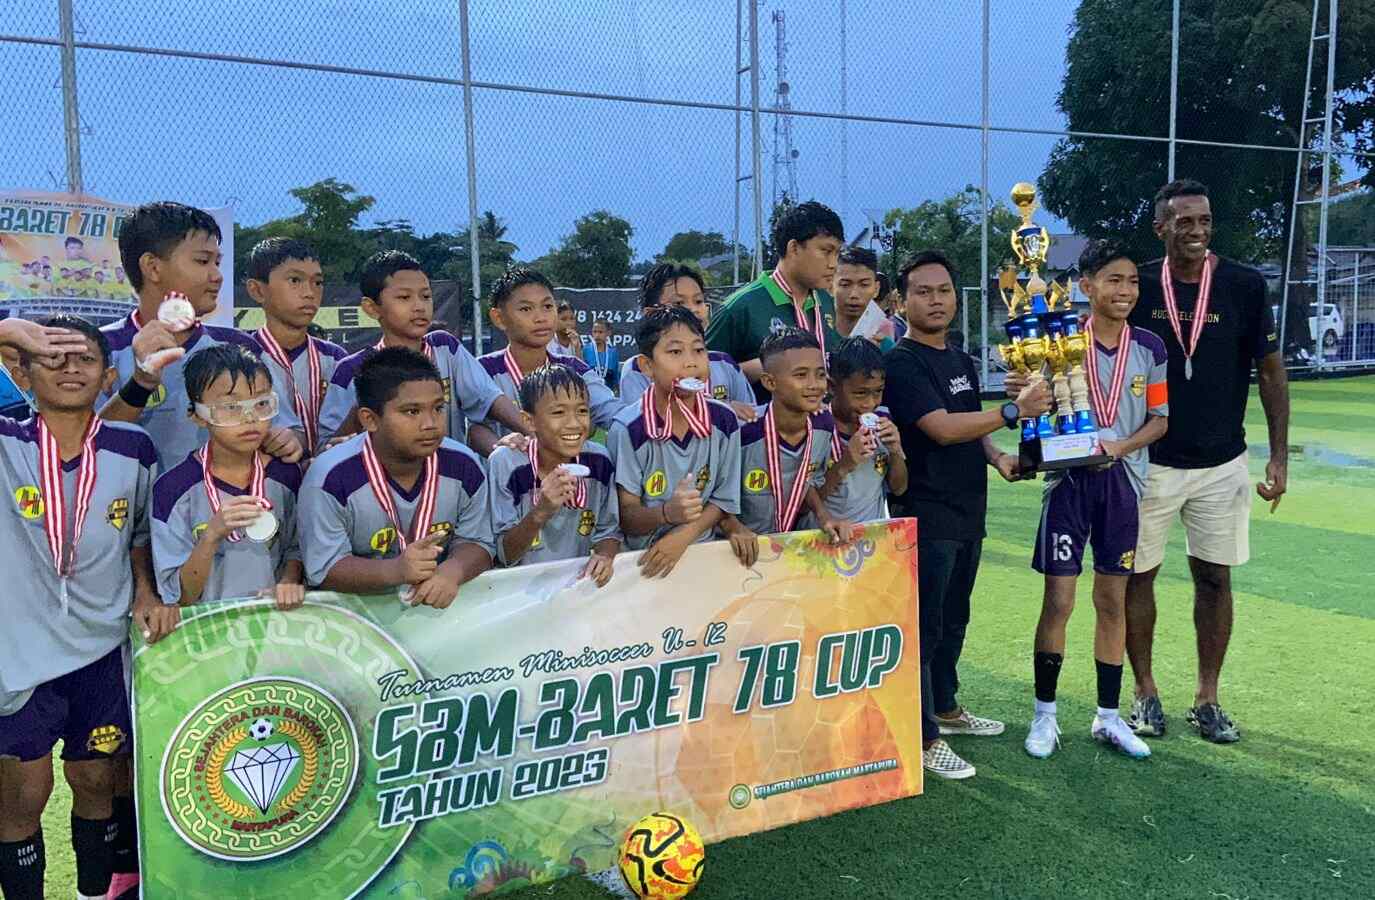 Dramatis! SOBP Juara Turnamen SBM Baret78 U12 Cup 2023 Lewat Adu